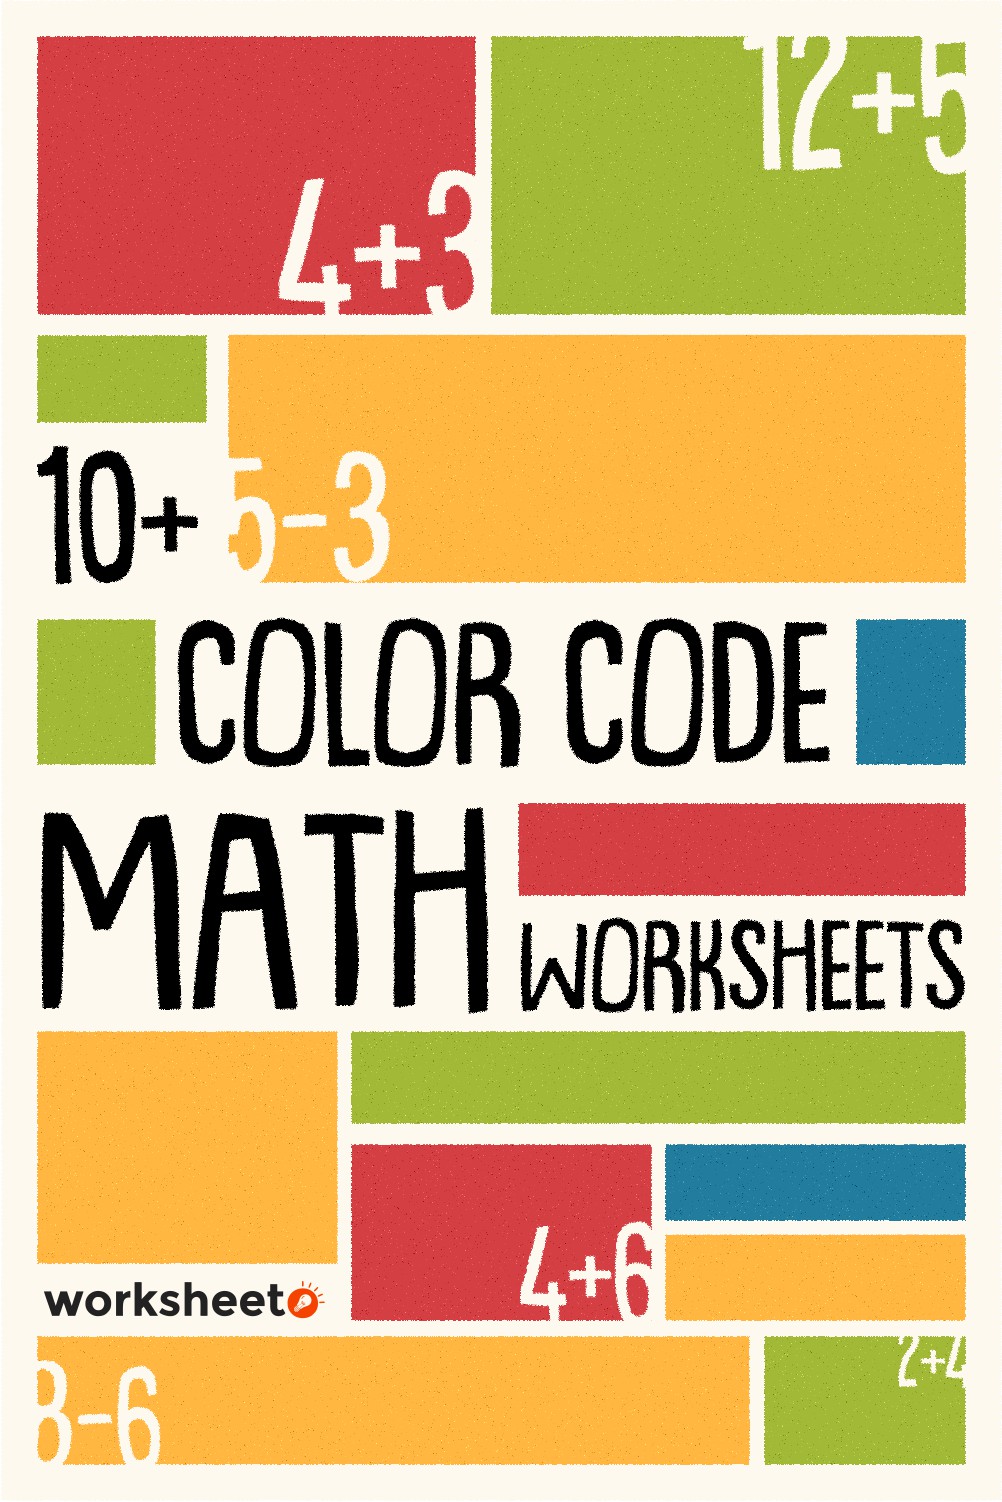 19 Images of Color Code Math Worksheets